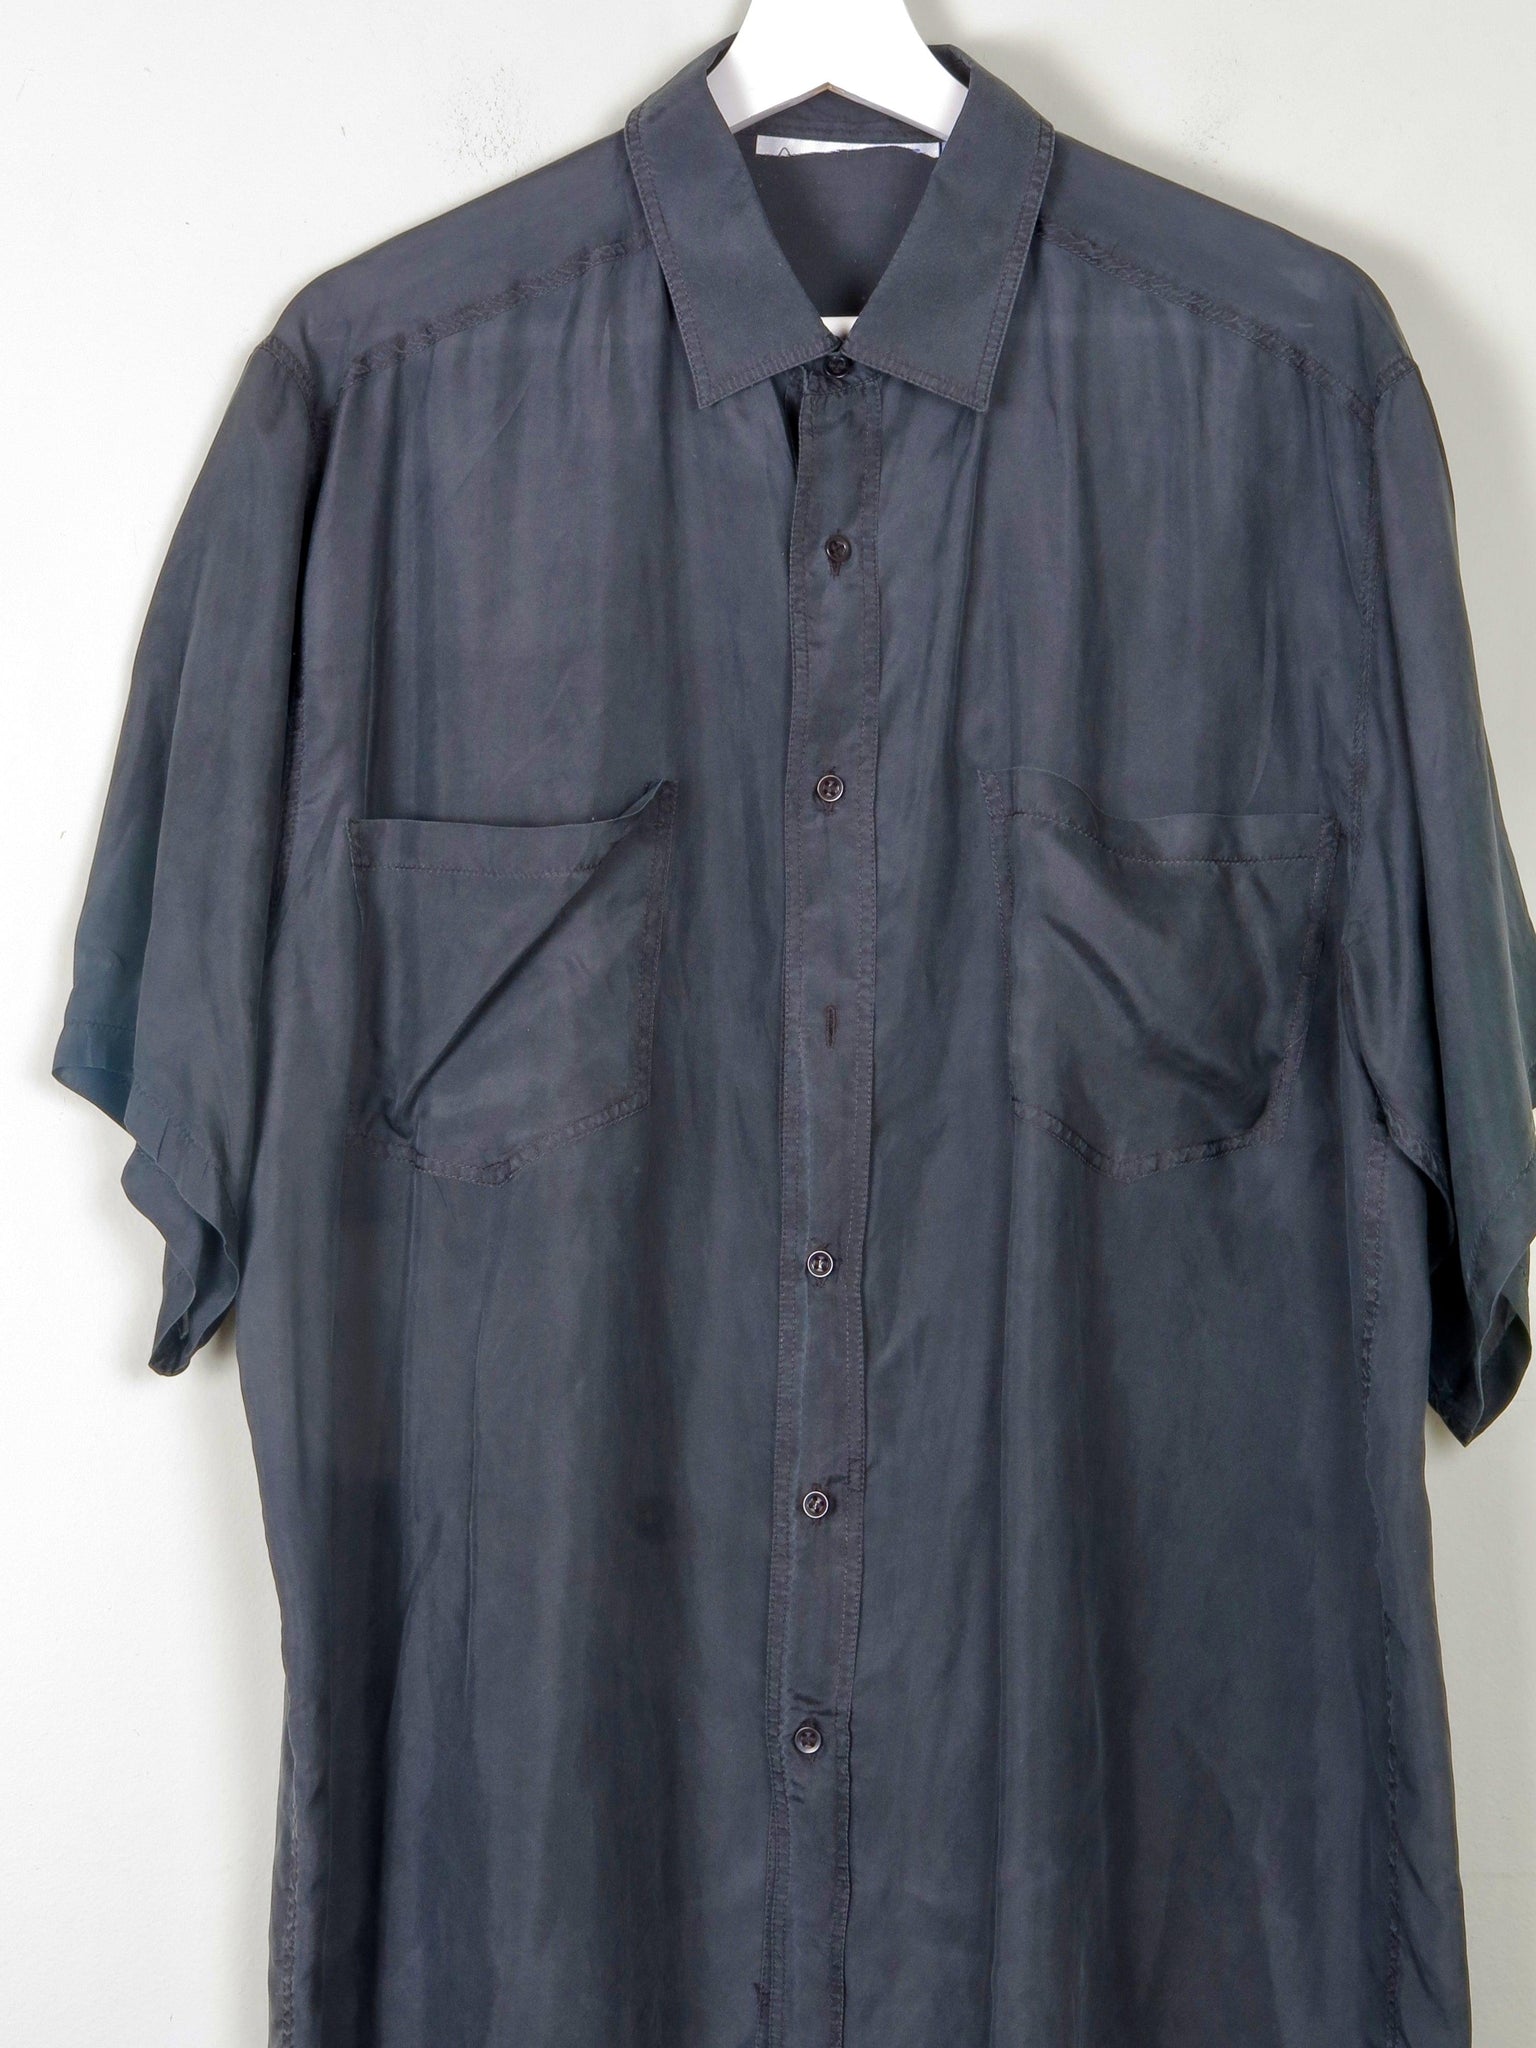 Men's Black Silk Short Sleeved Shirt L - The Harlequin